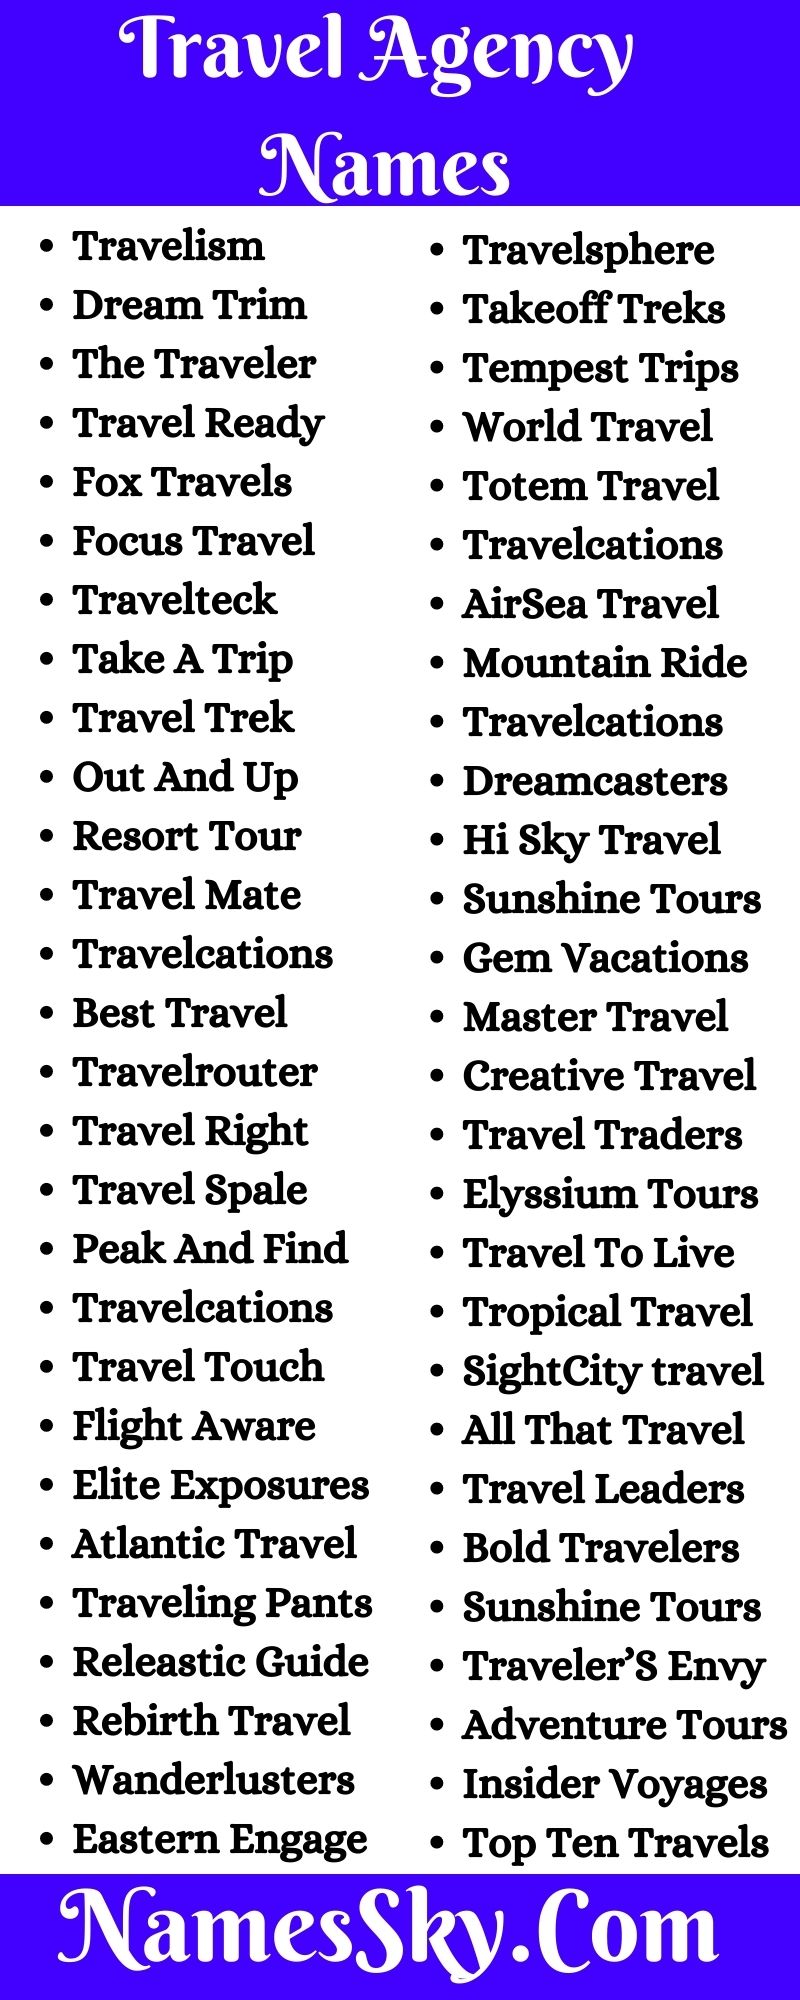 Travel Agency Names